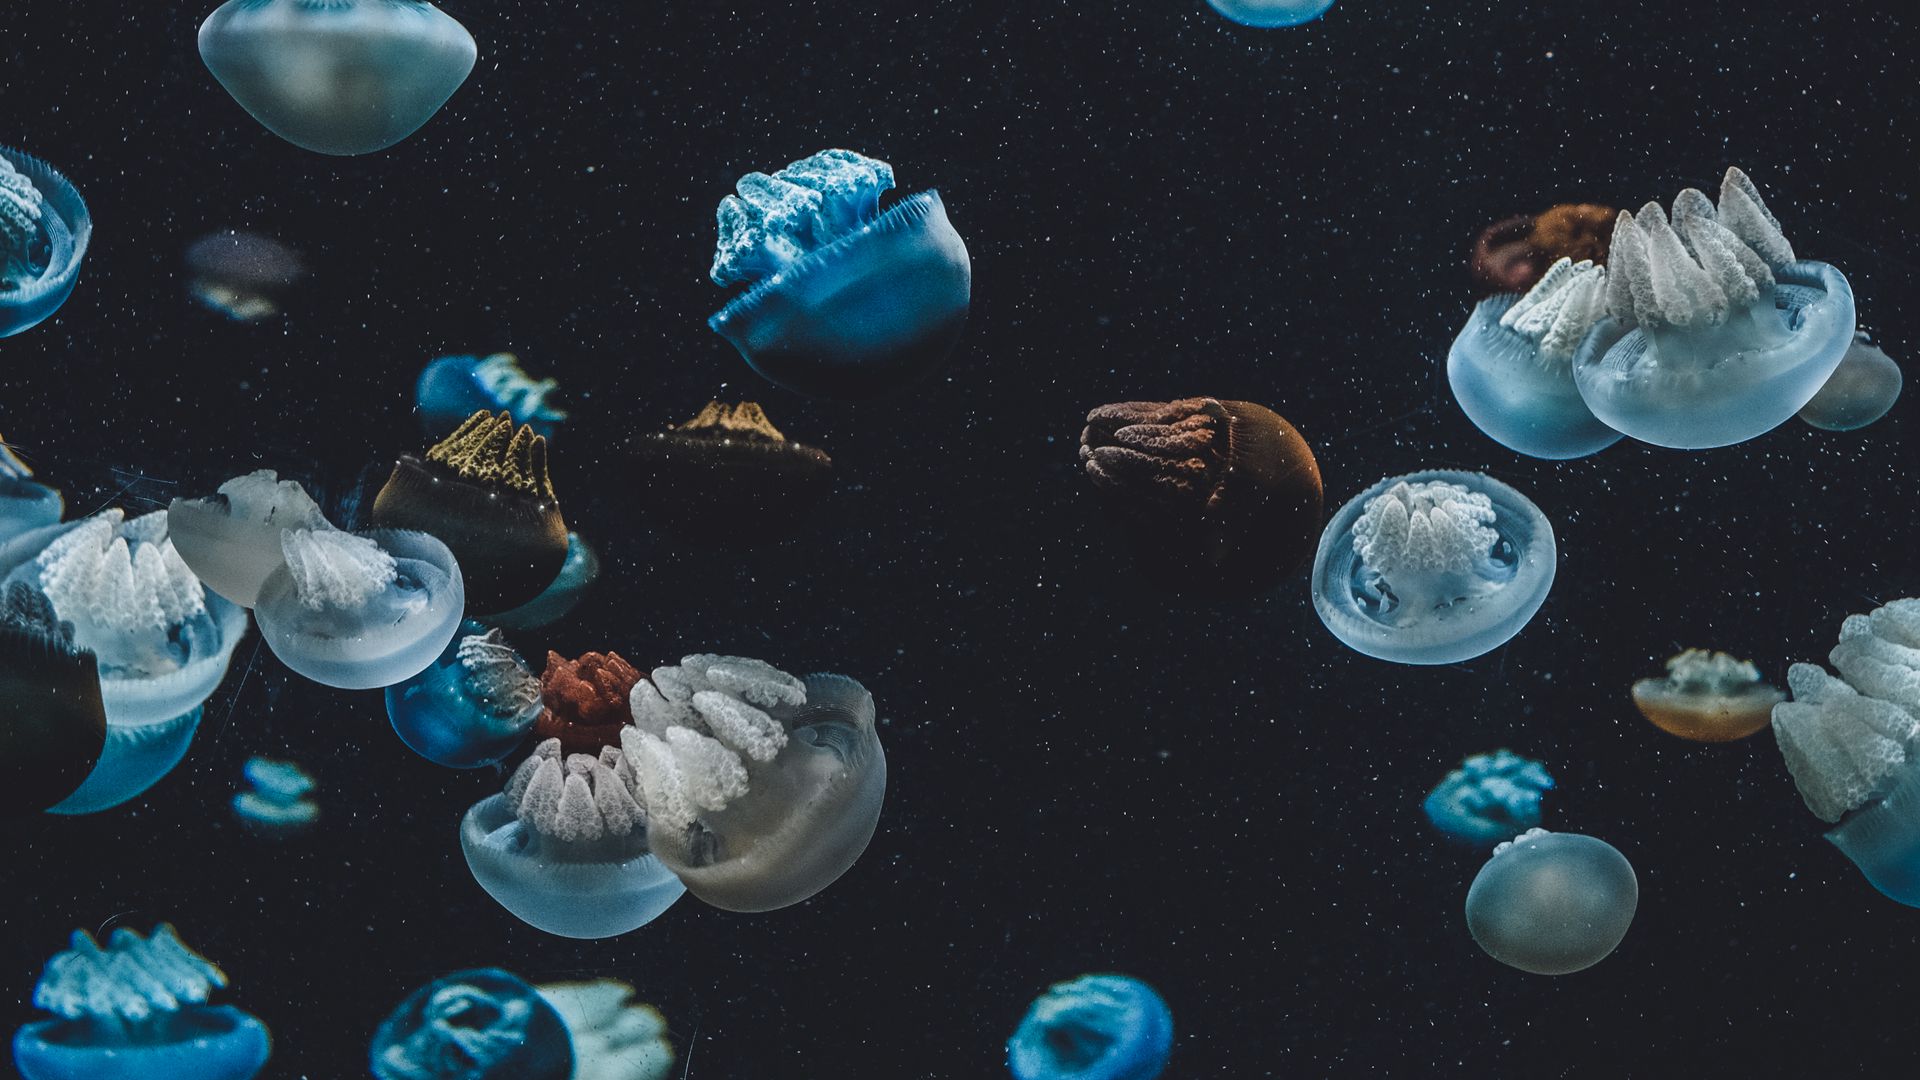 Download wallpaper 1920x1080 jellyfish, underwater world, aquarium full hd,  hdtv, fhd, 1080p hd background